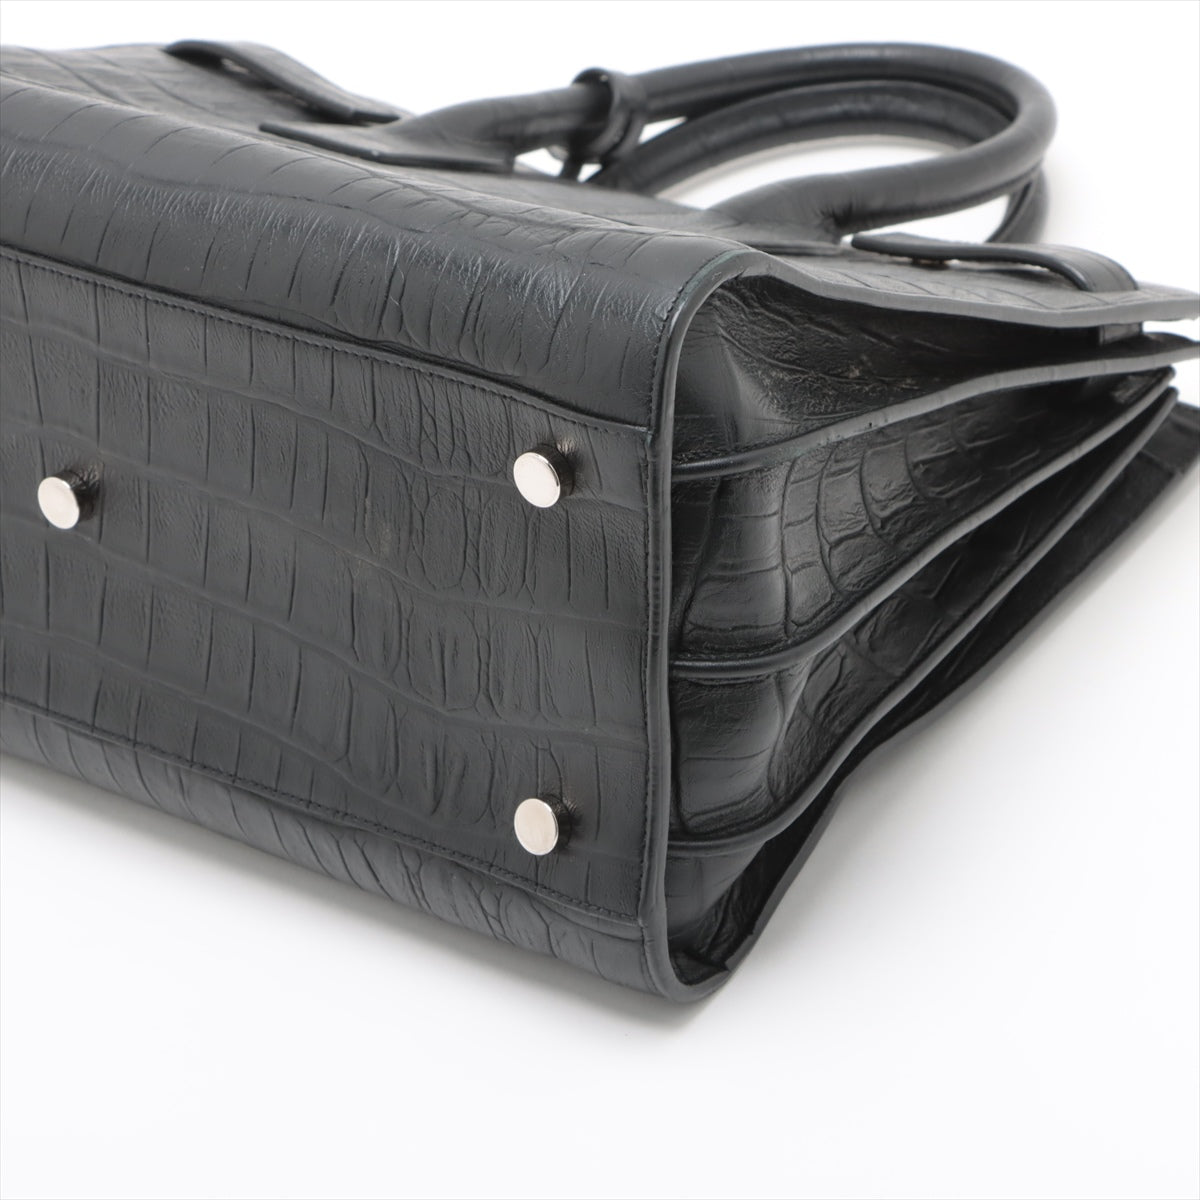 Saint Laurent Paris Sac de Jour Supru Moc croc 2way handbag Black 324823